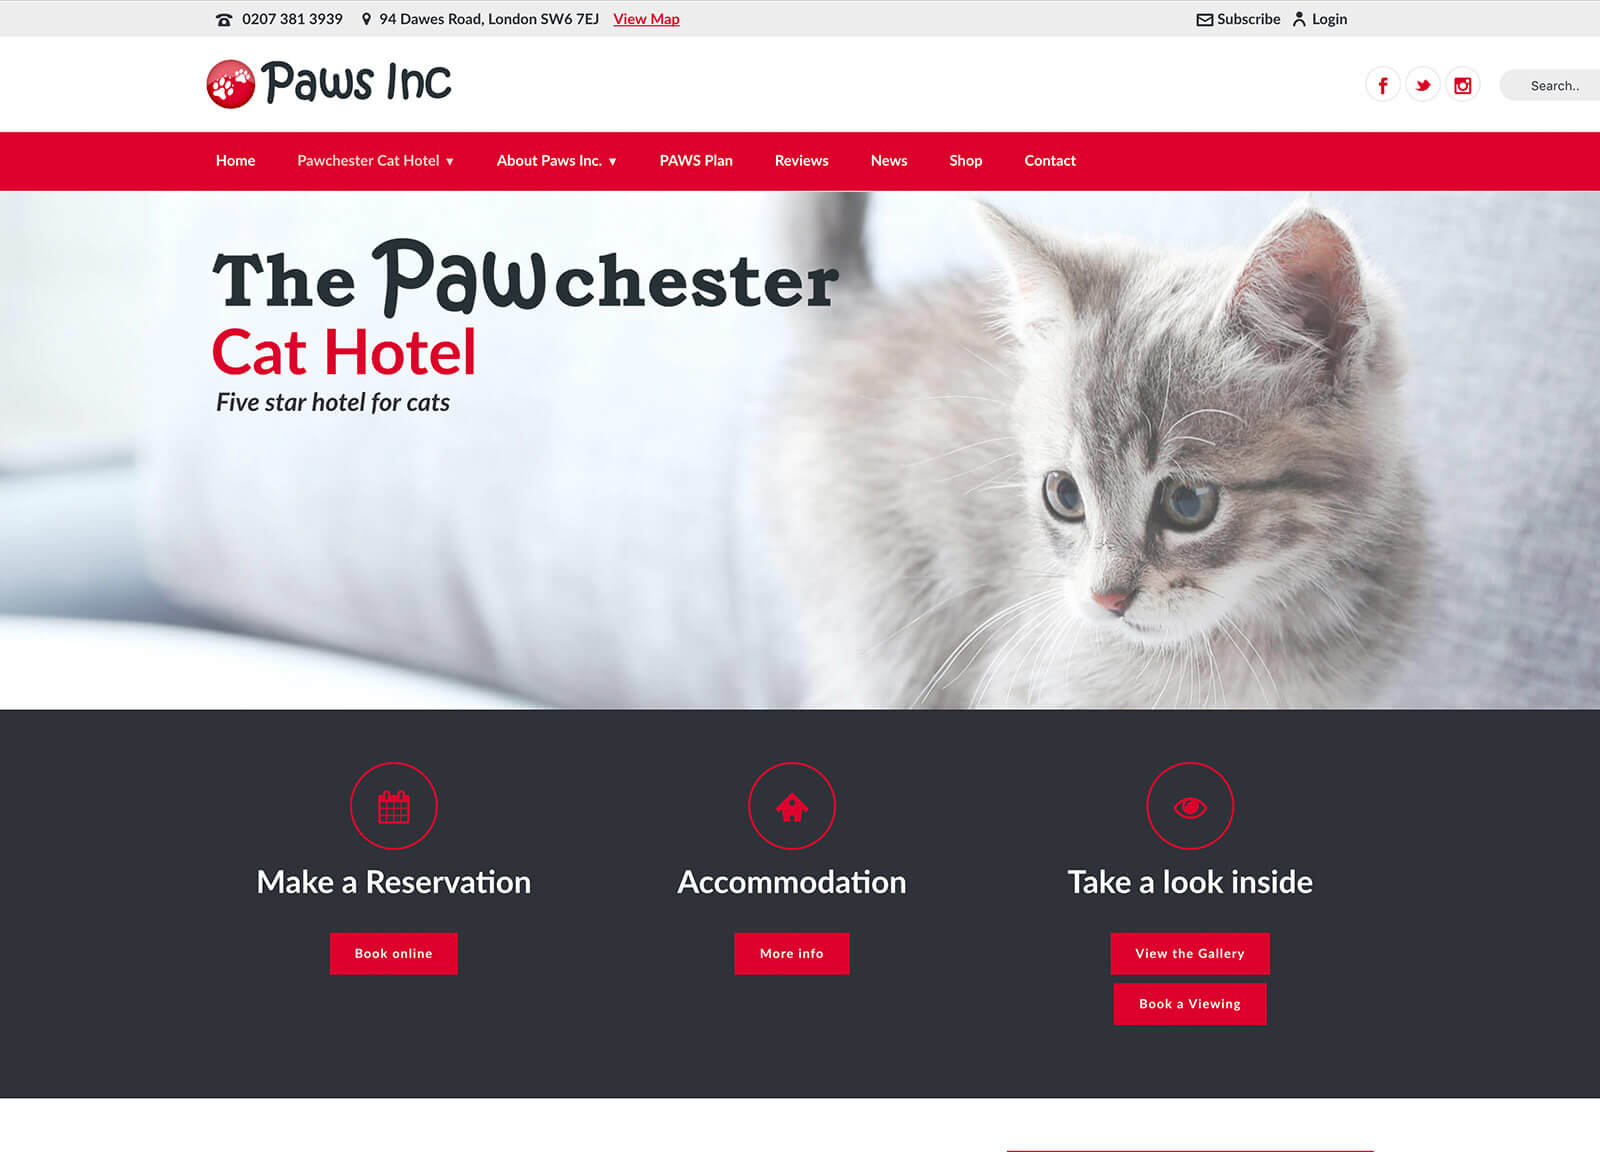 Cat hotel website design - Main cat hotel page